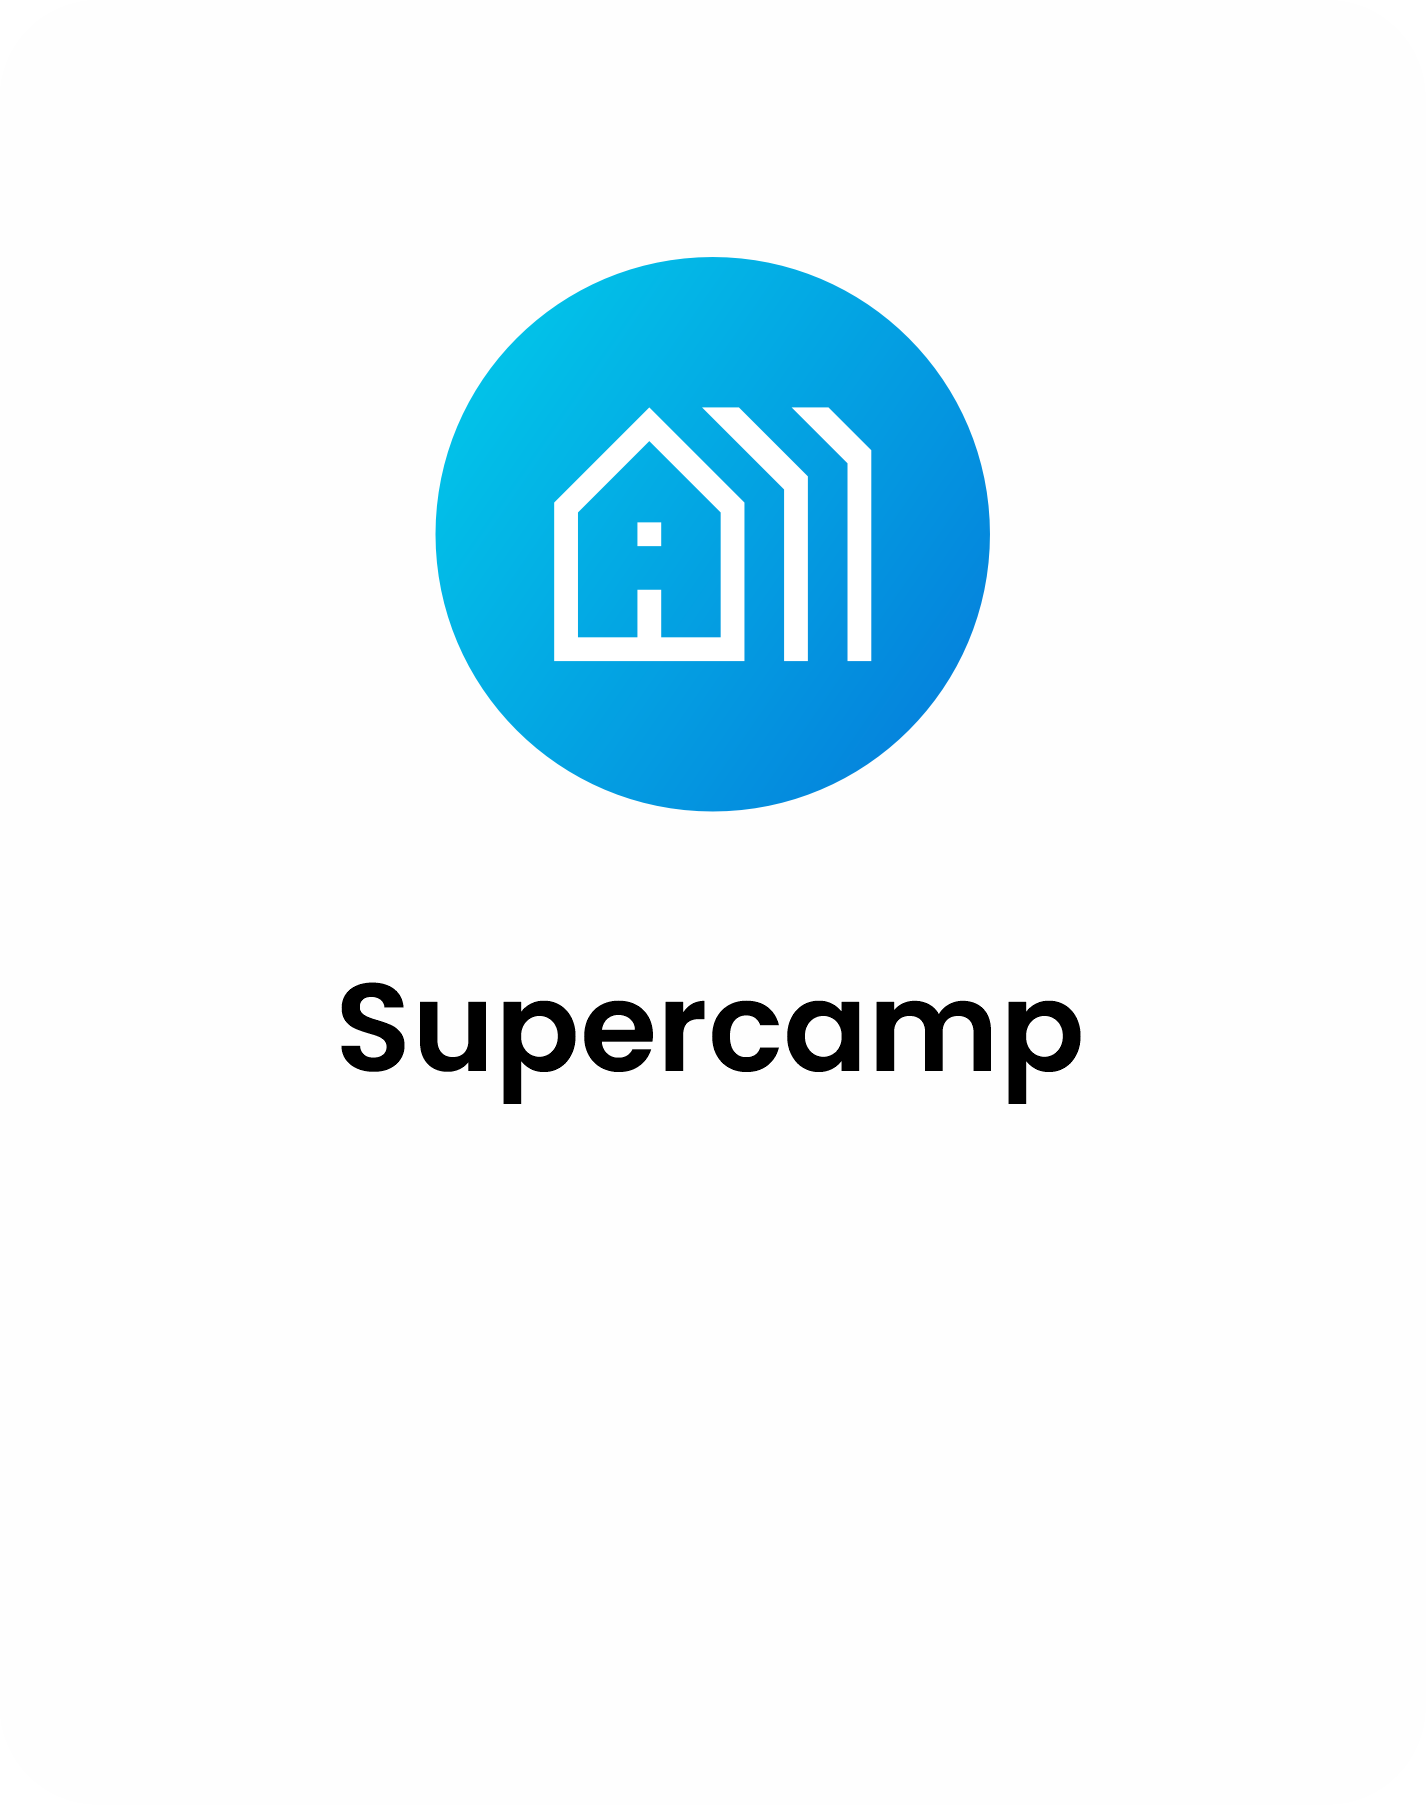 Supercamp